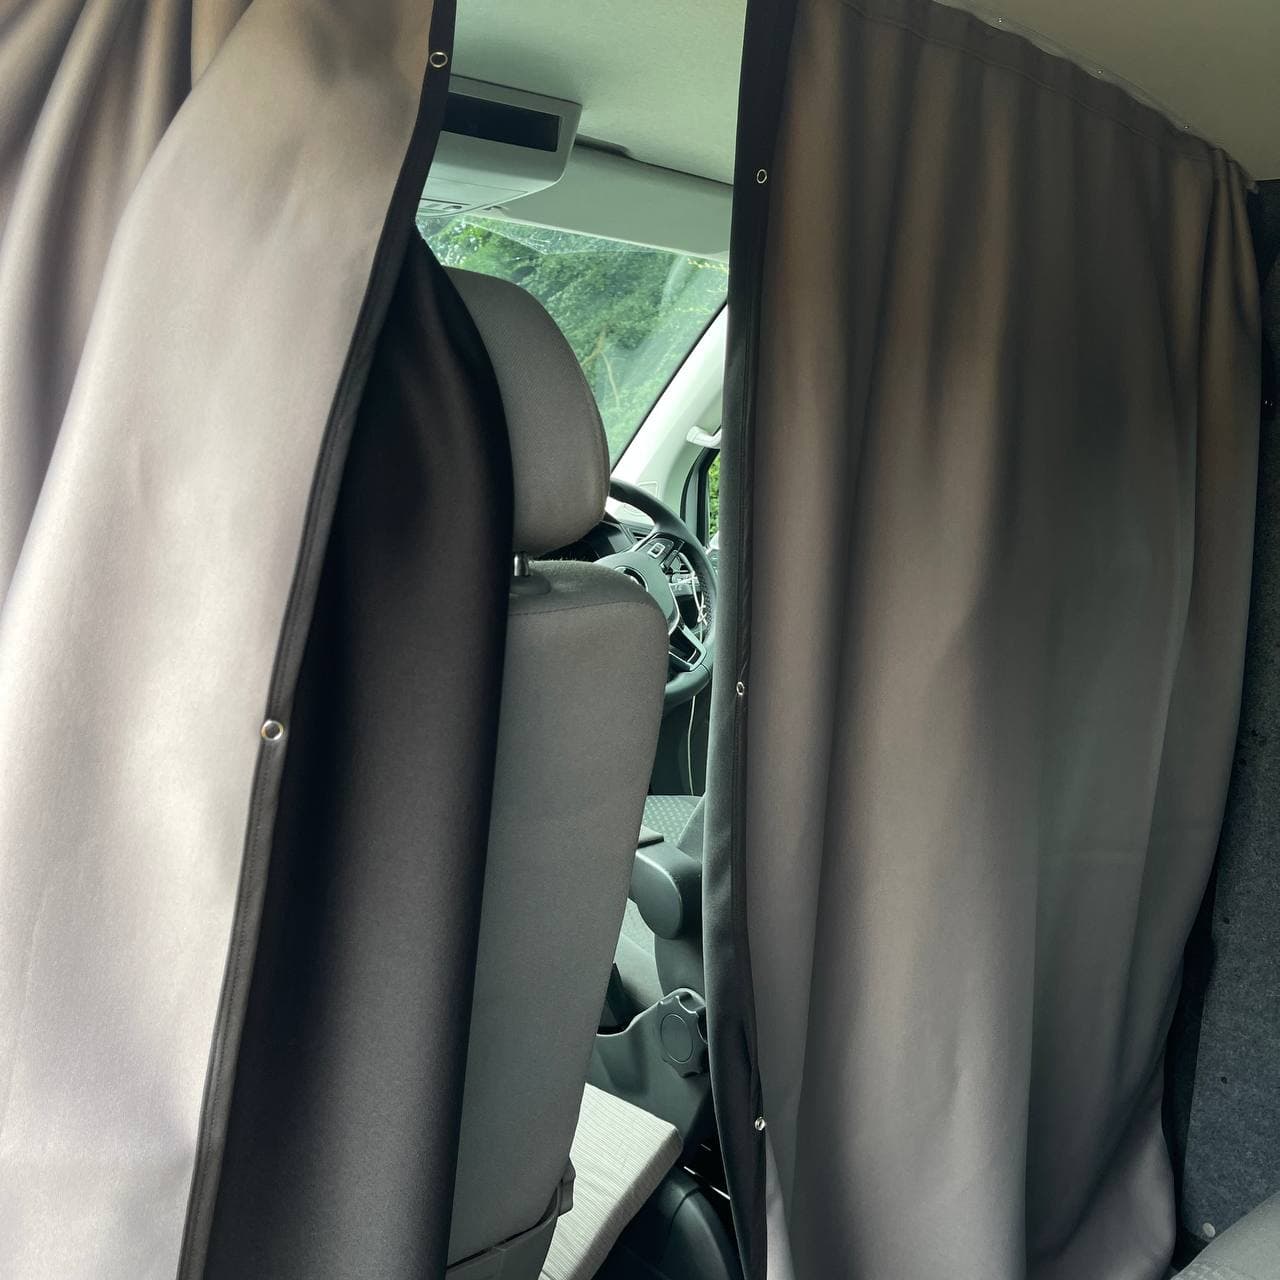 Opel Vivaro Cab Divider Curtain Kit